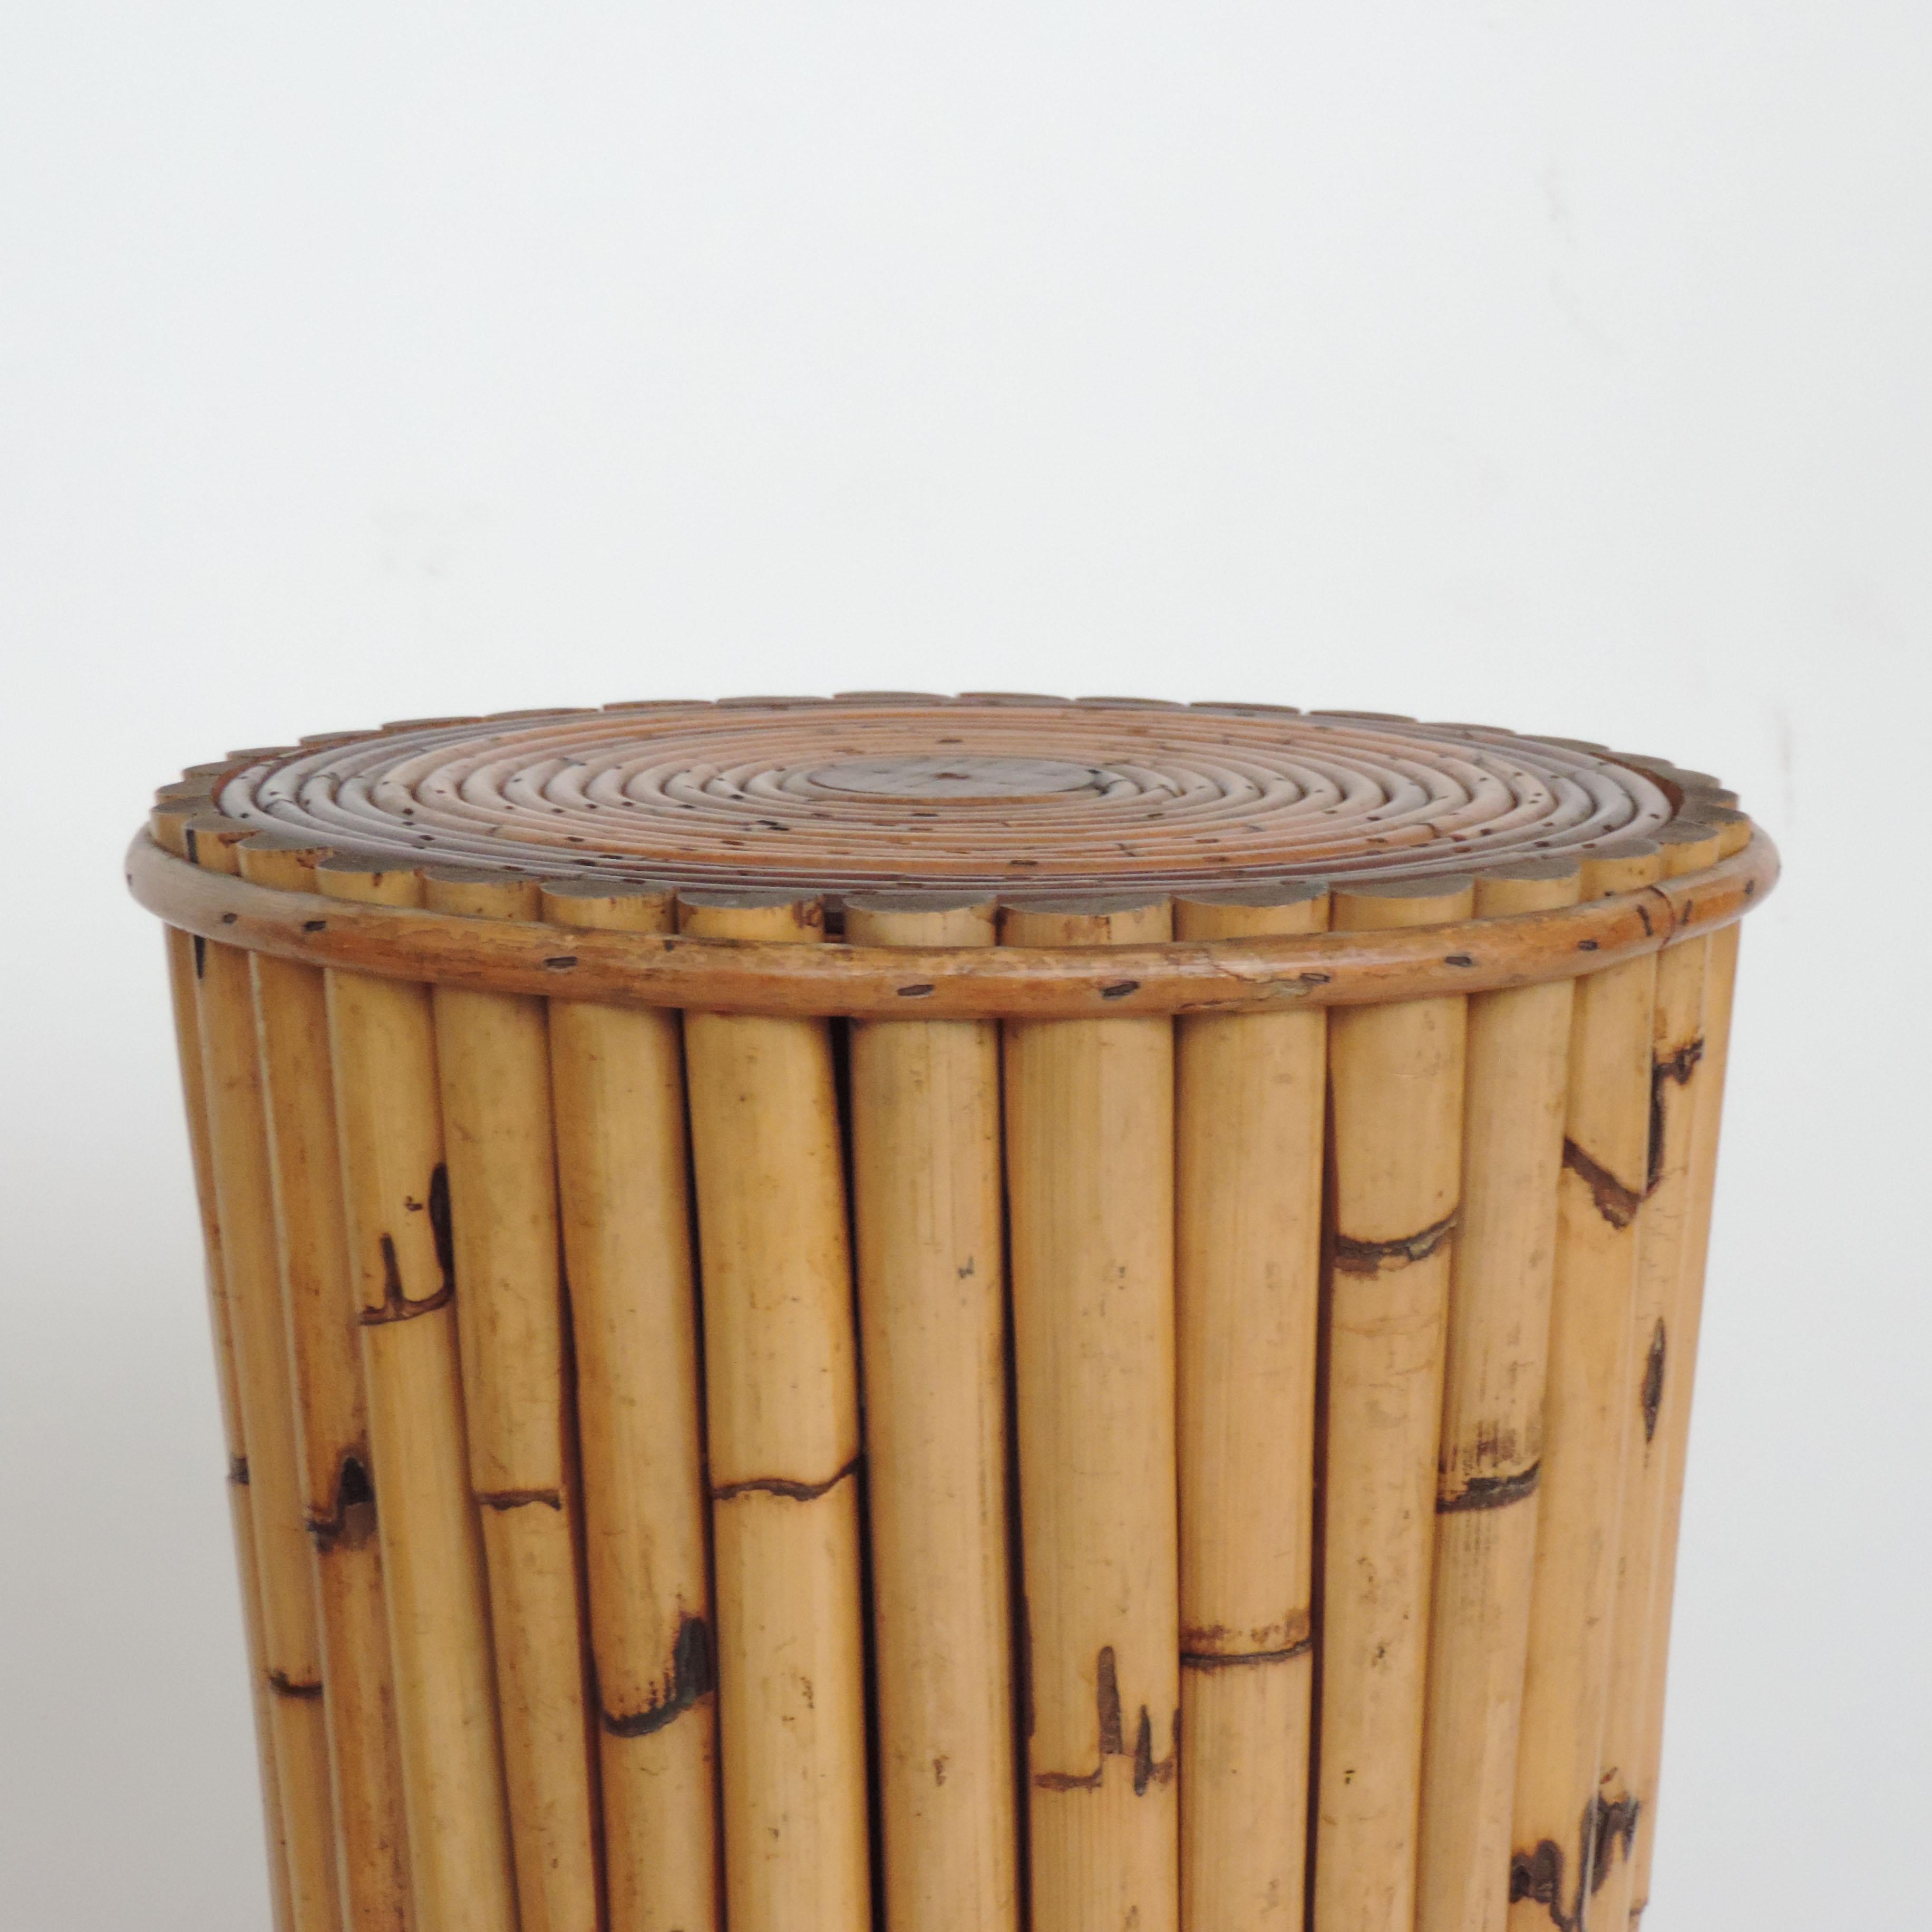 Splendid pair of bamboo and wicker stools.
Italy 1950s.